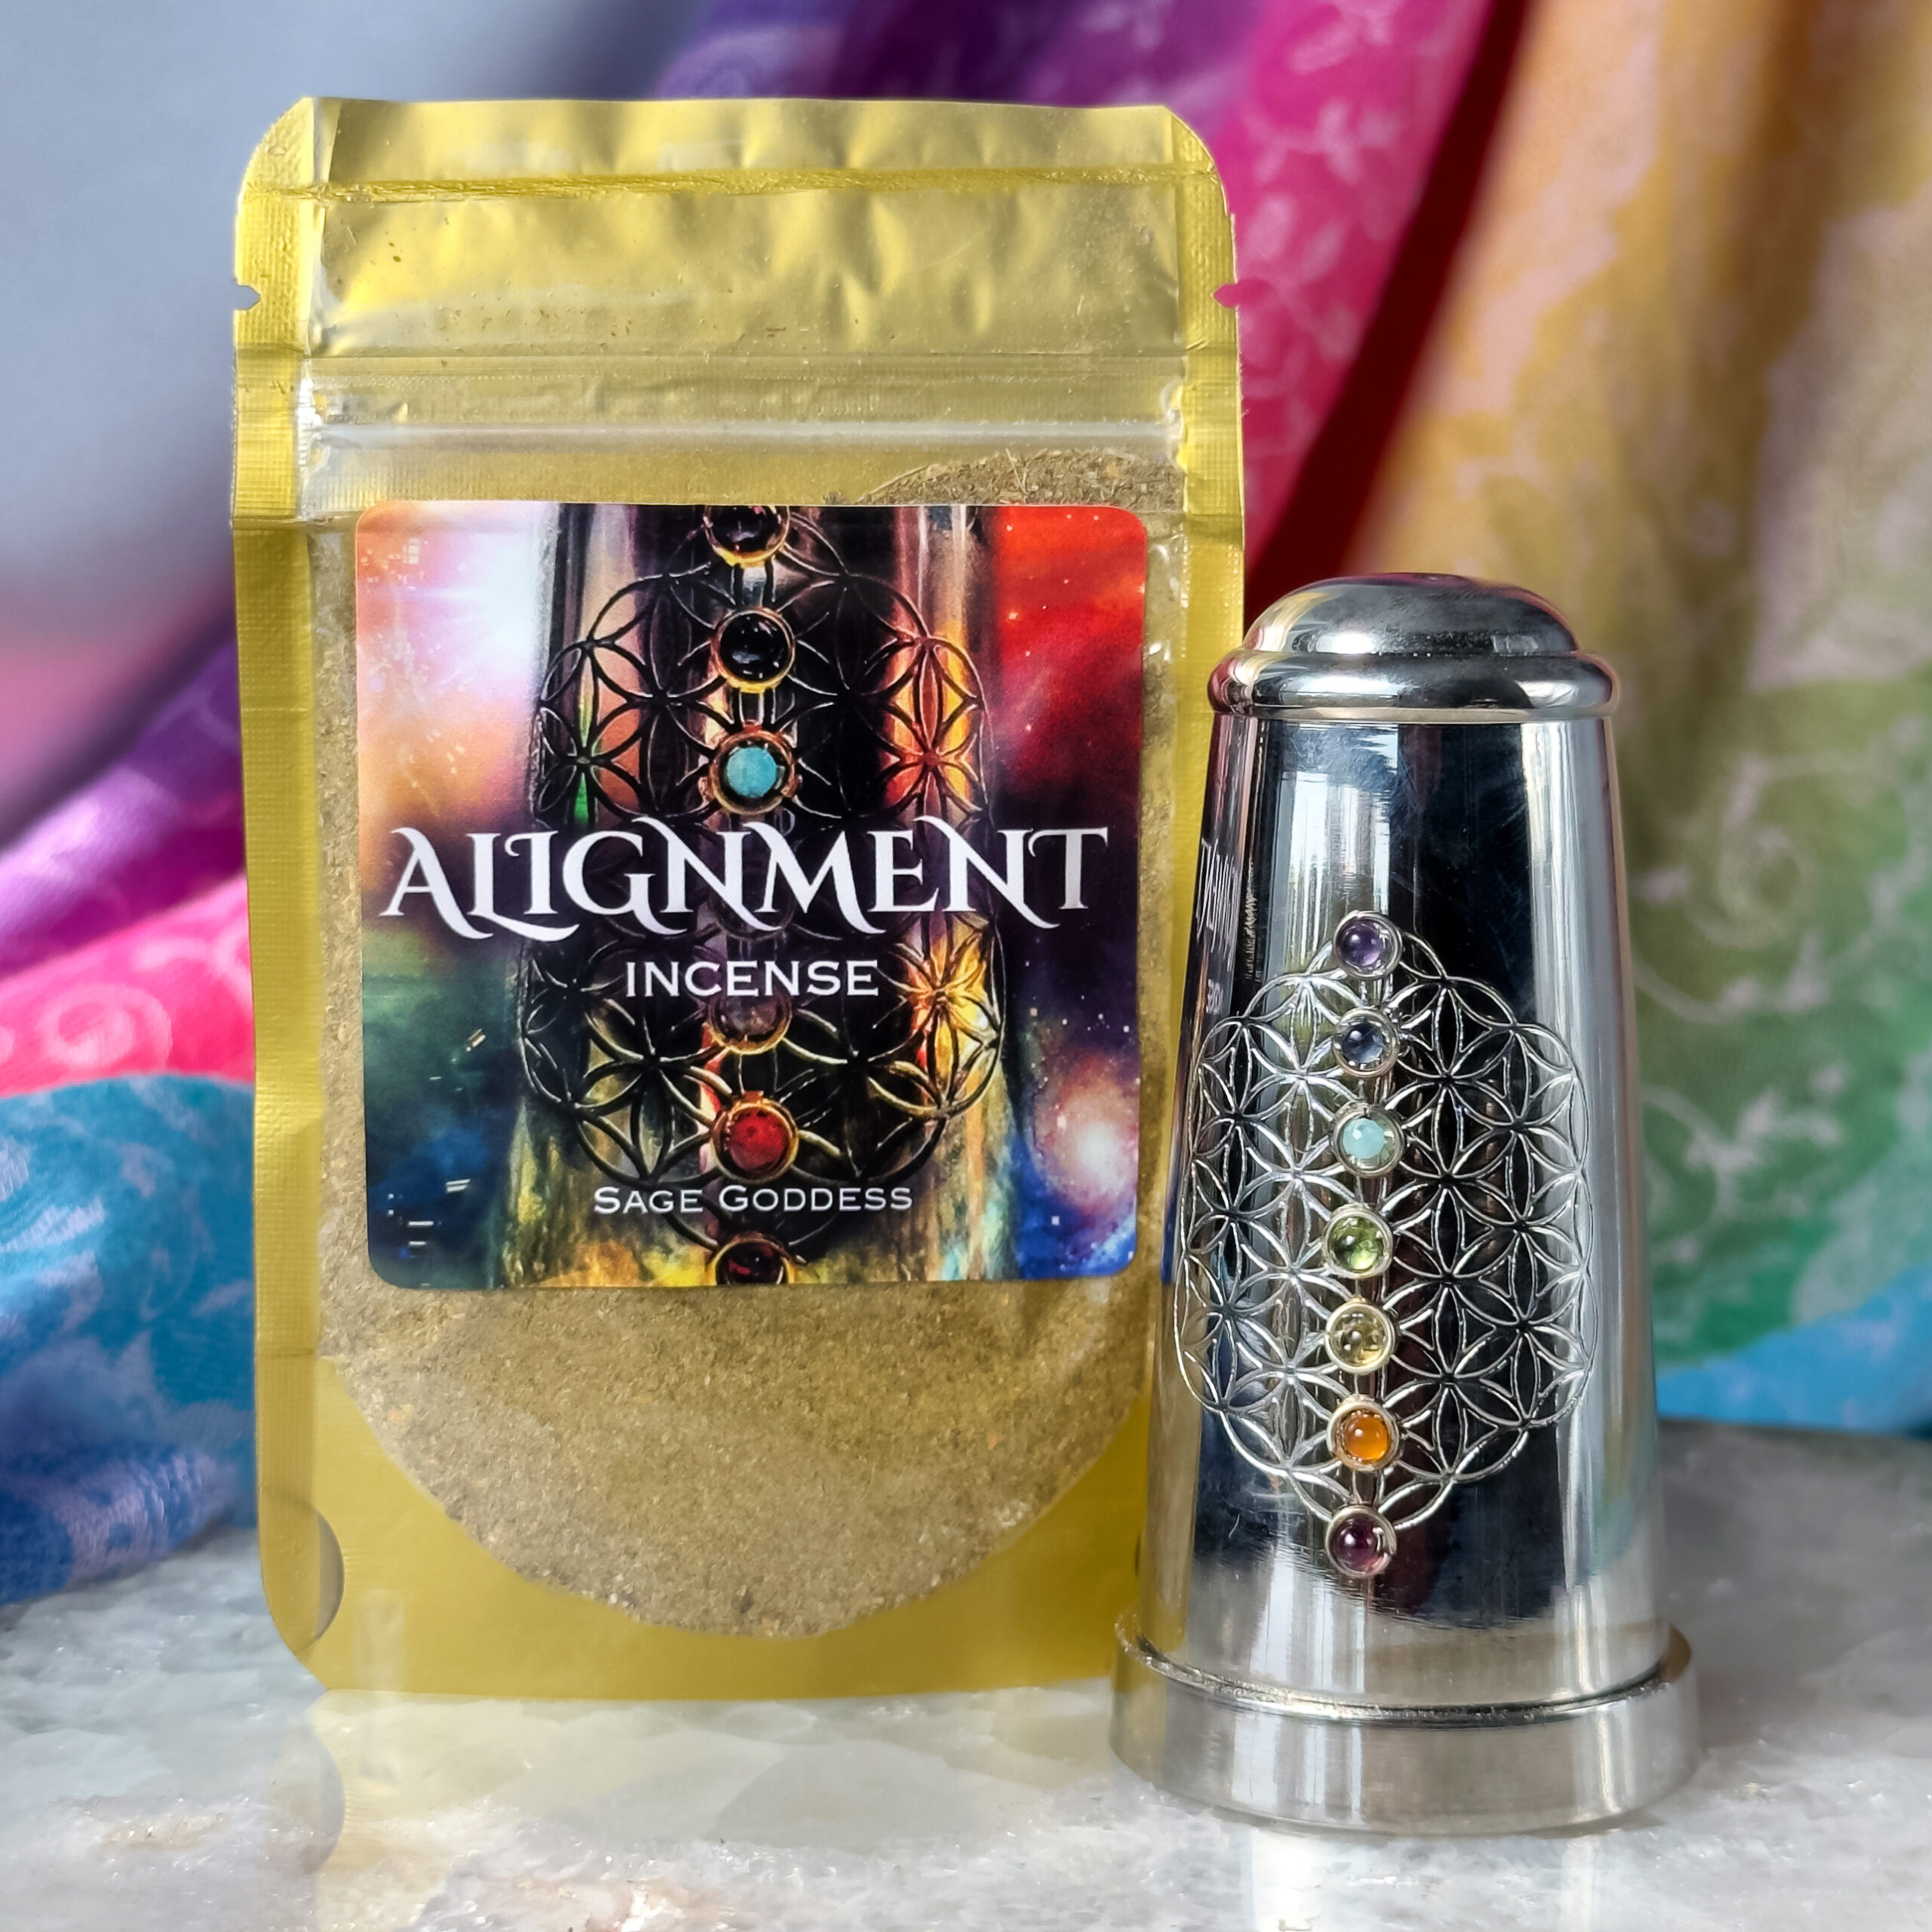 Image of Chakra Healing Incense Shaker & Alignment Incense Duo